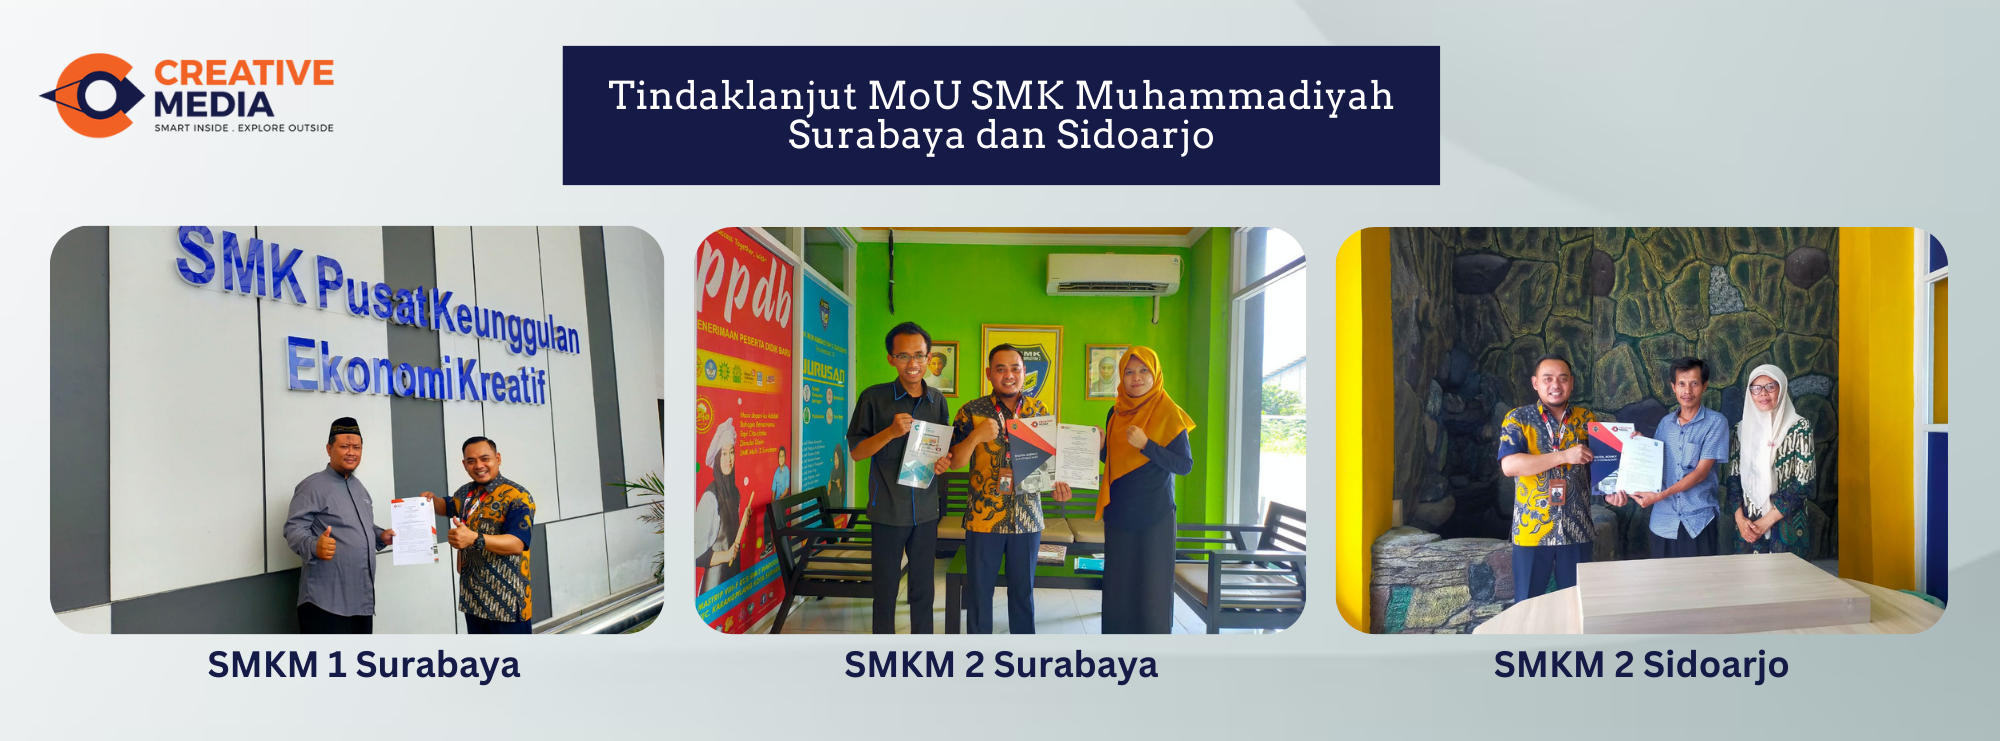 Tindaklanjut MoU SMK Muhammadiyah Surabaya dan Sidoarjo